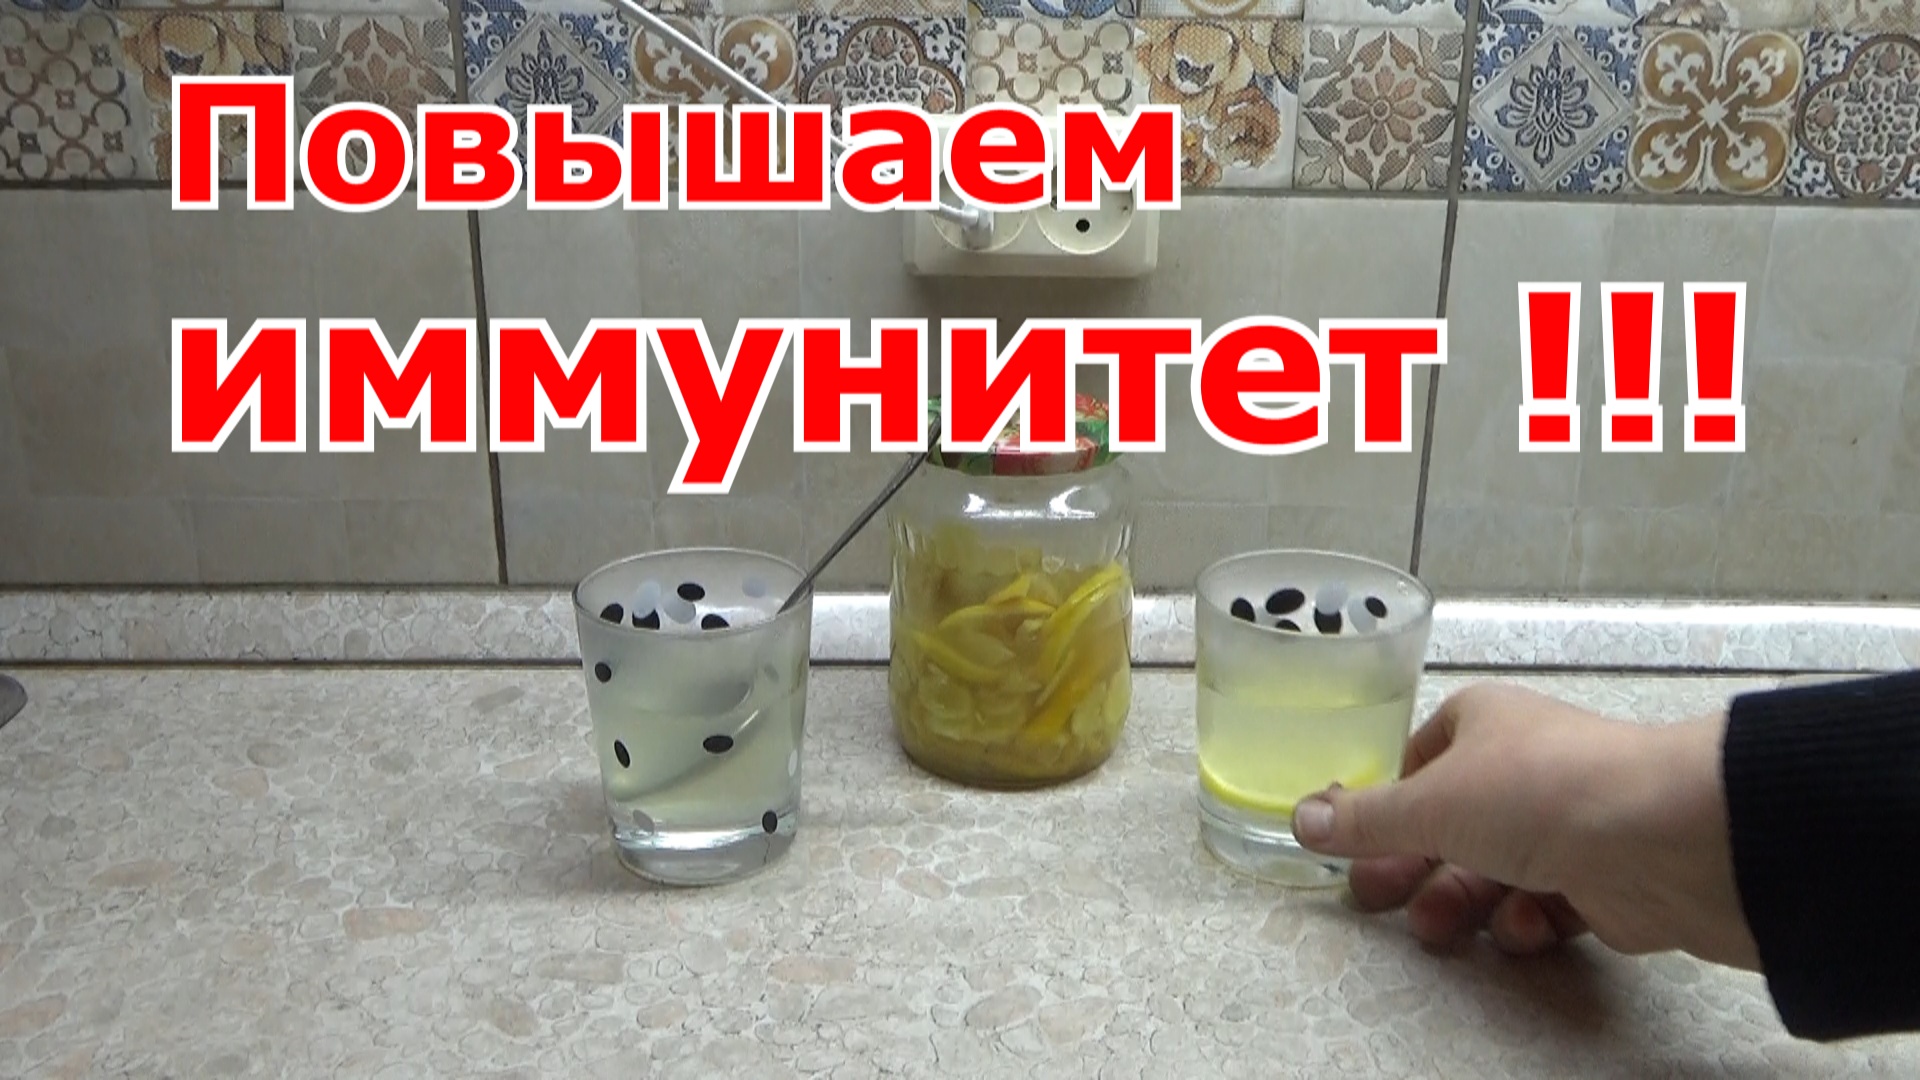 Рецепт витаминной смеси на основе меда, лимона и имбиря для укрепления иммунитета Мед, лимон, имбирь